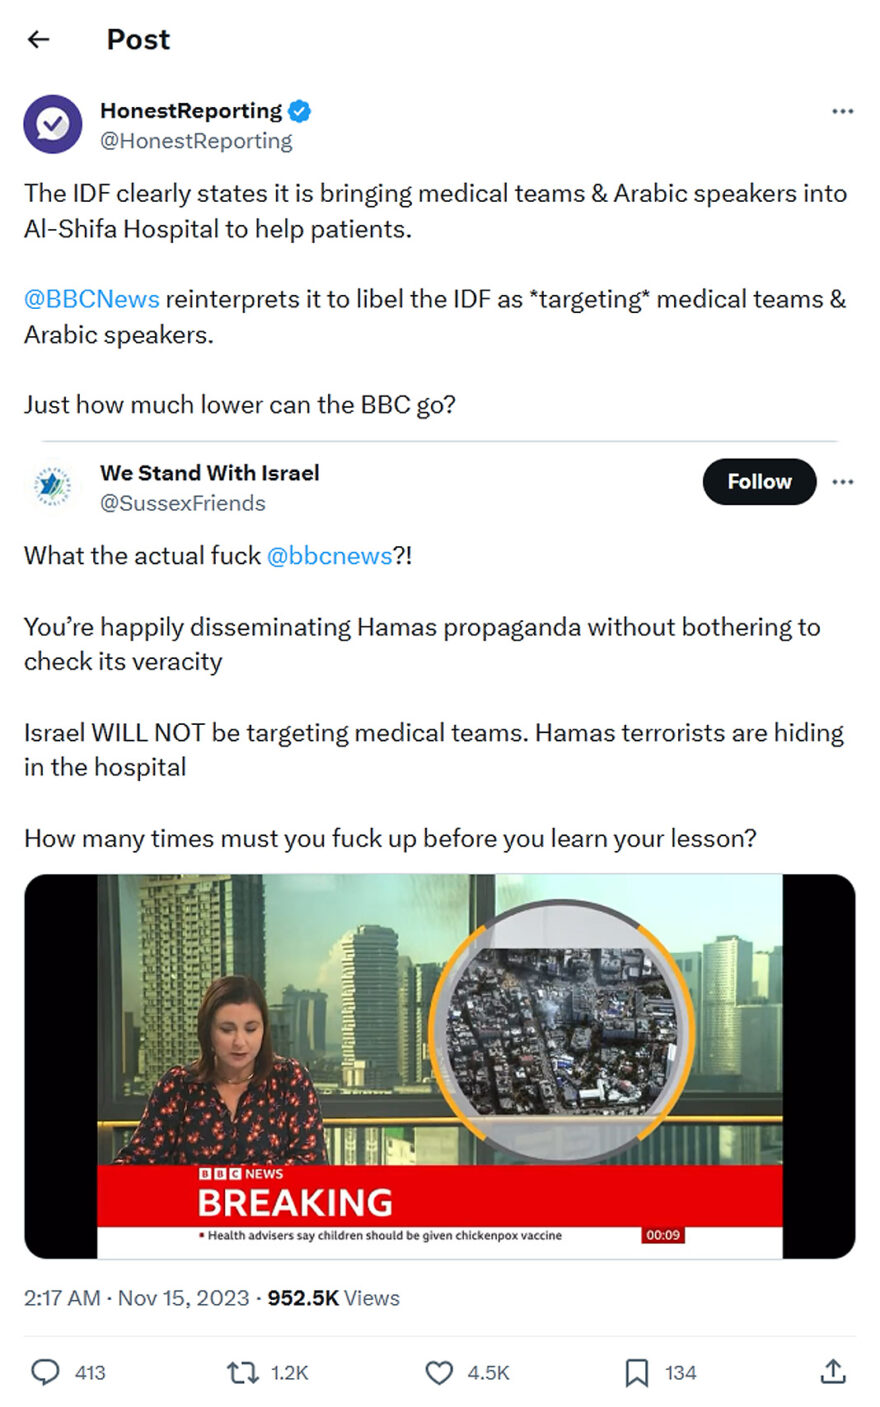 HonestReporting-tweet-15November2023-BBCNews reinterprets it to libel the IDF